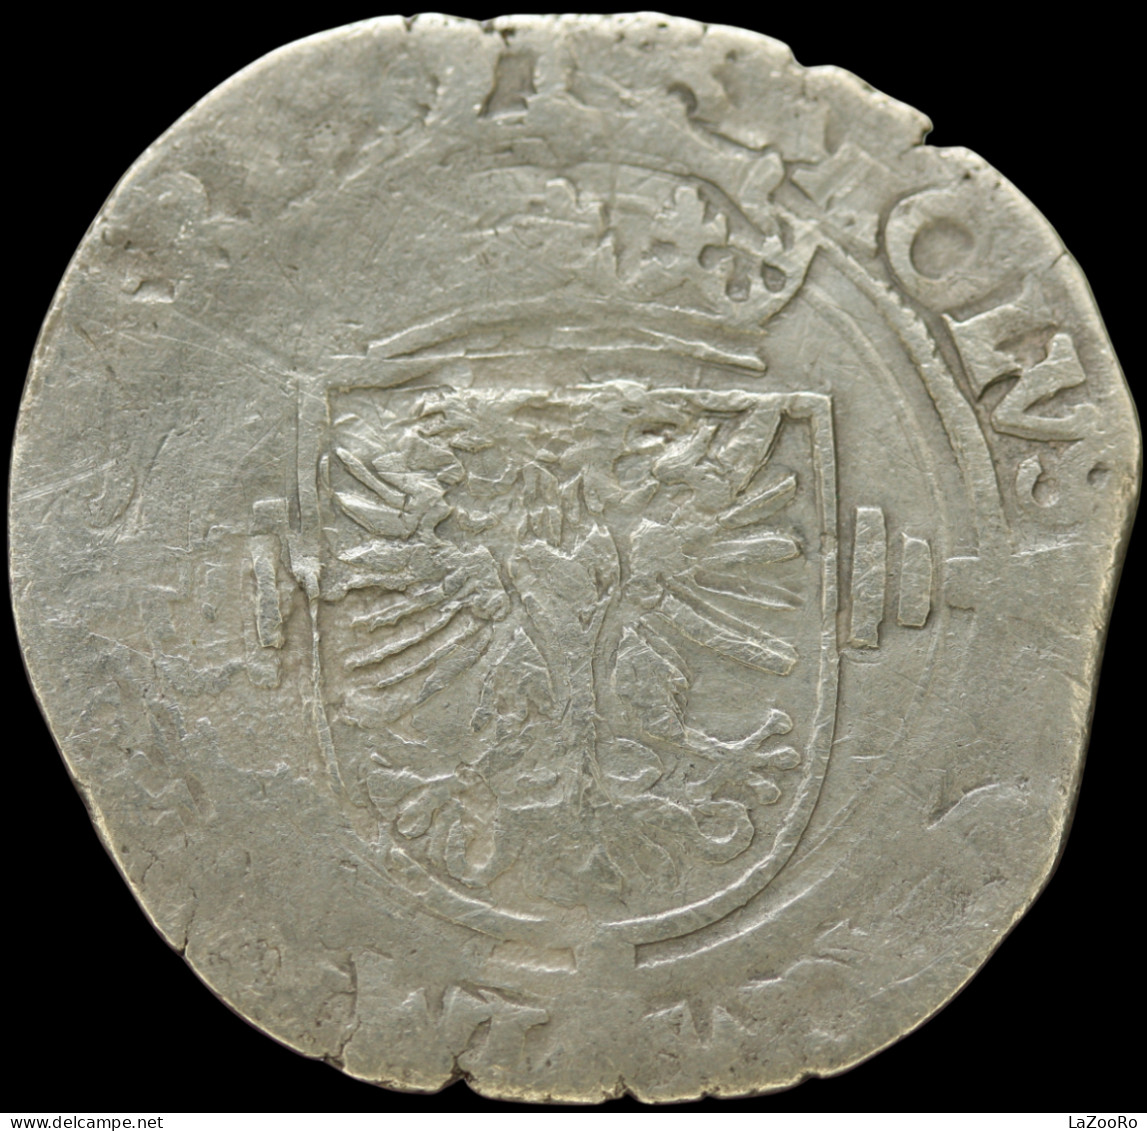 LaZooRo: Spanish Netherlands FLANDERS ½ Silver Real ND (1521-1539) F Charles V (1506-1555) - Silver - Spanish Netherlands